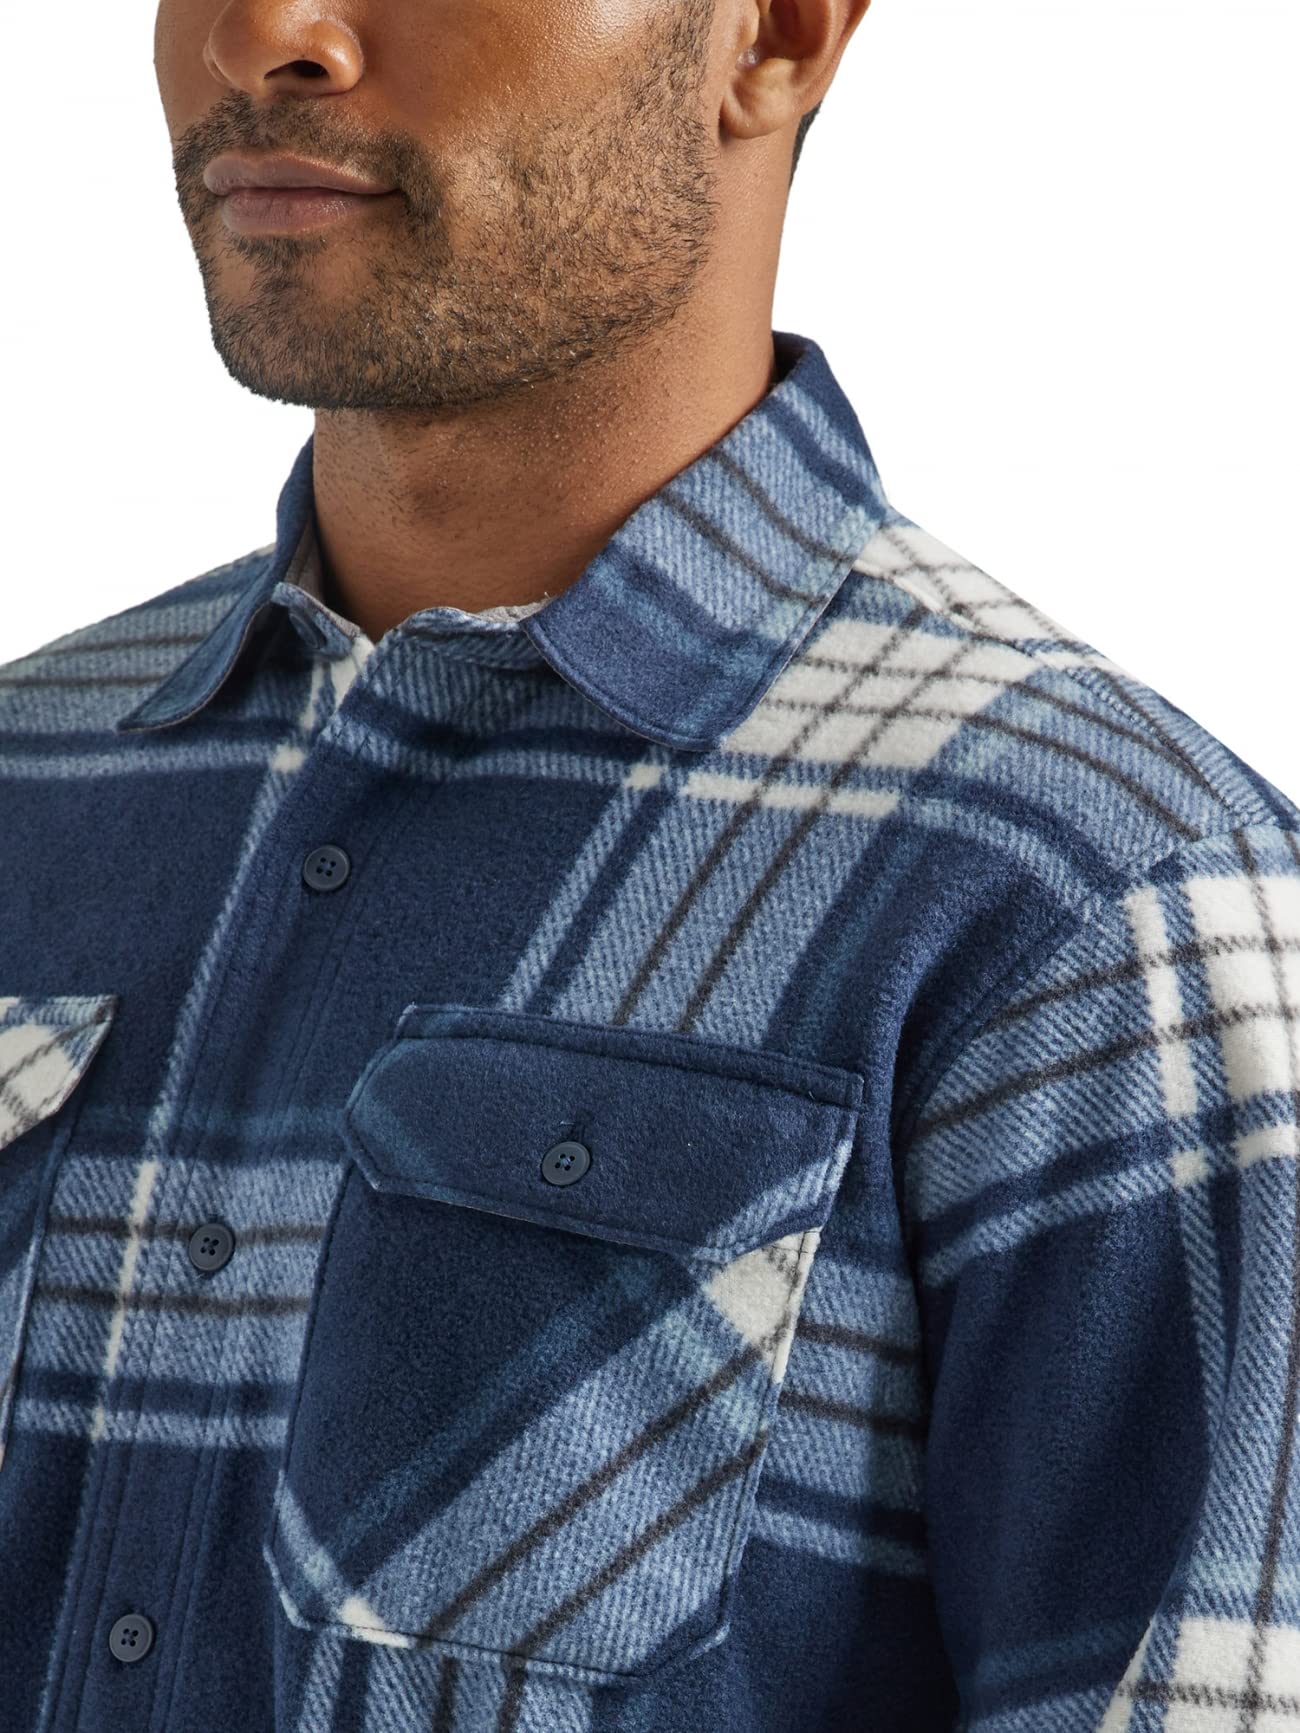 Wrangler Authentics Men's Long Sleeve Heavyweight Fleece Shirt, Total Eclipse, Large